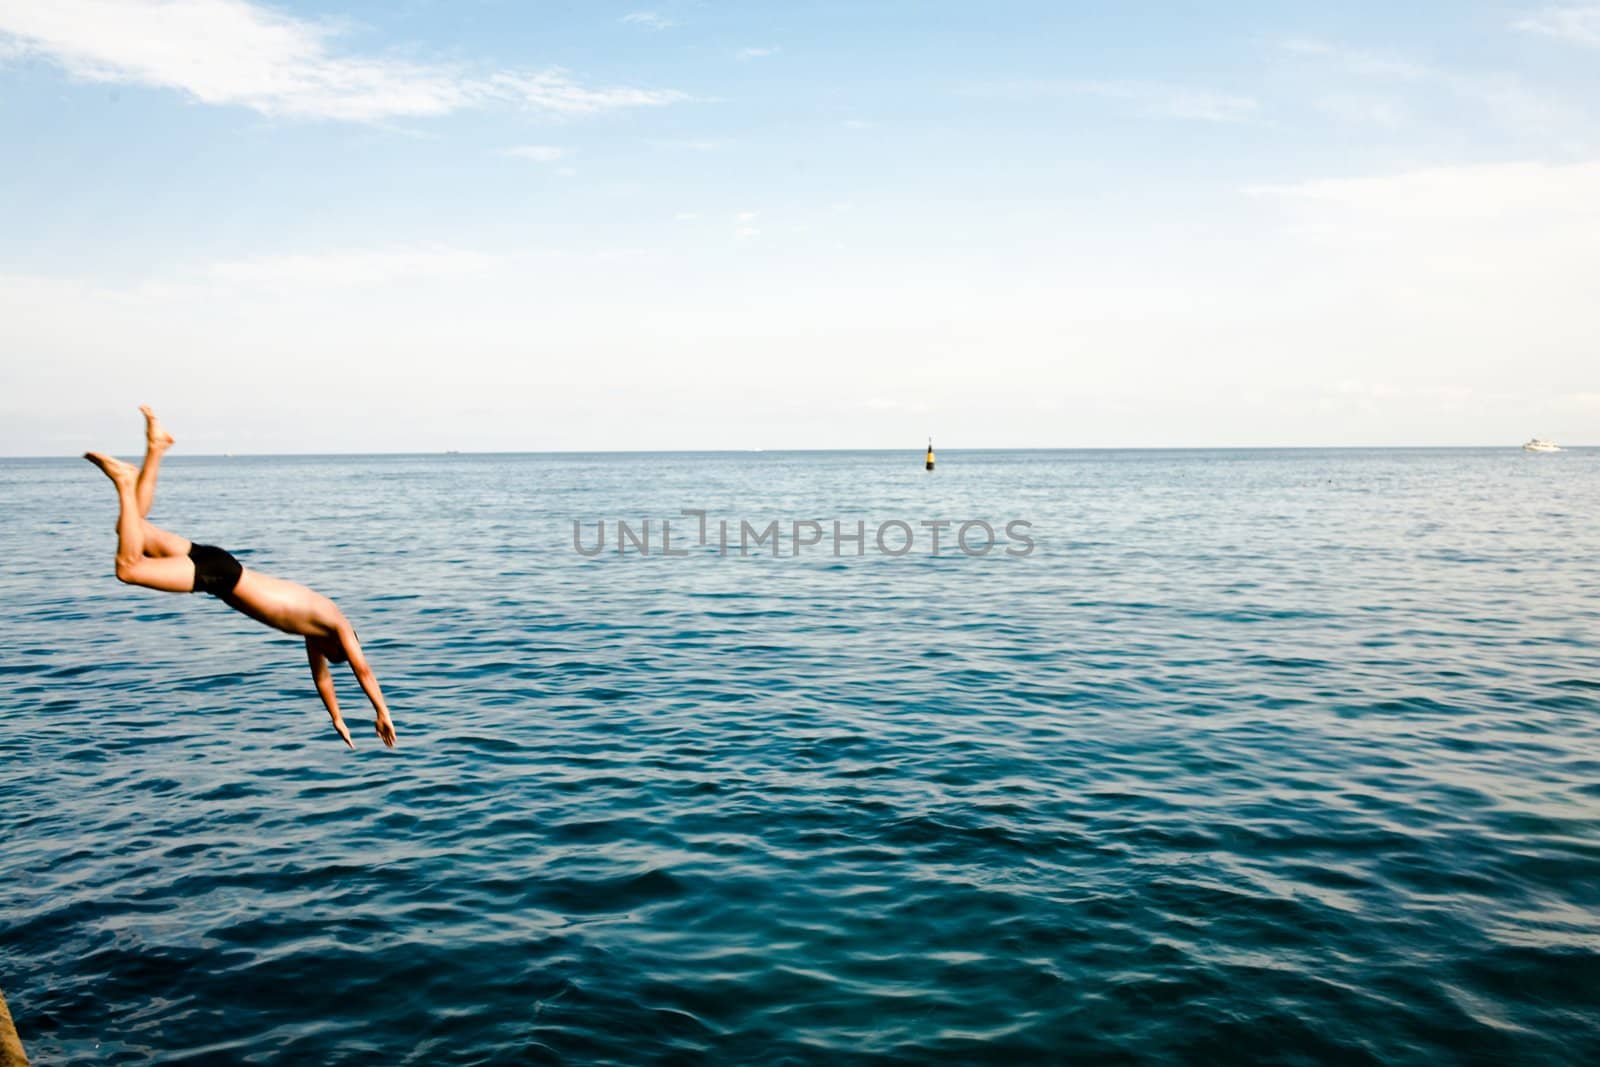 An image of men jumping in ocean